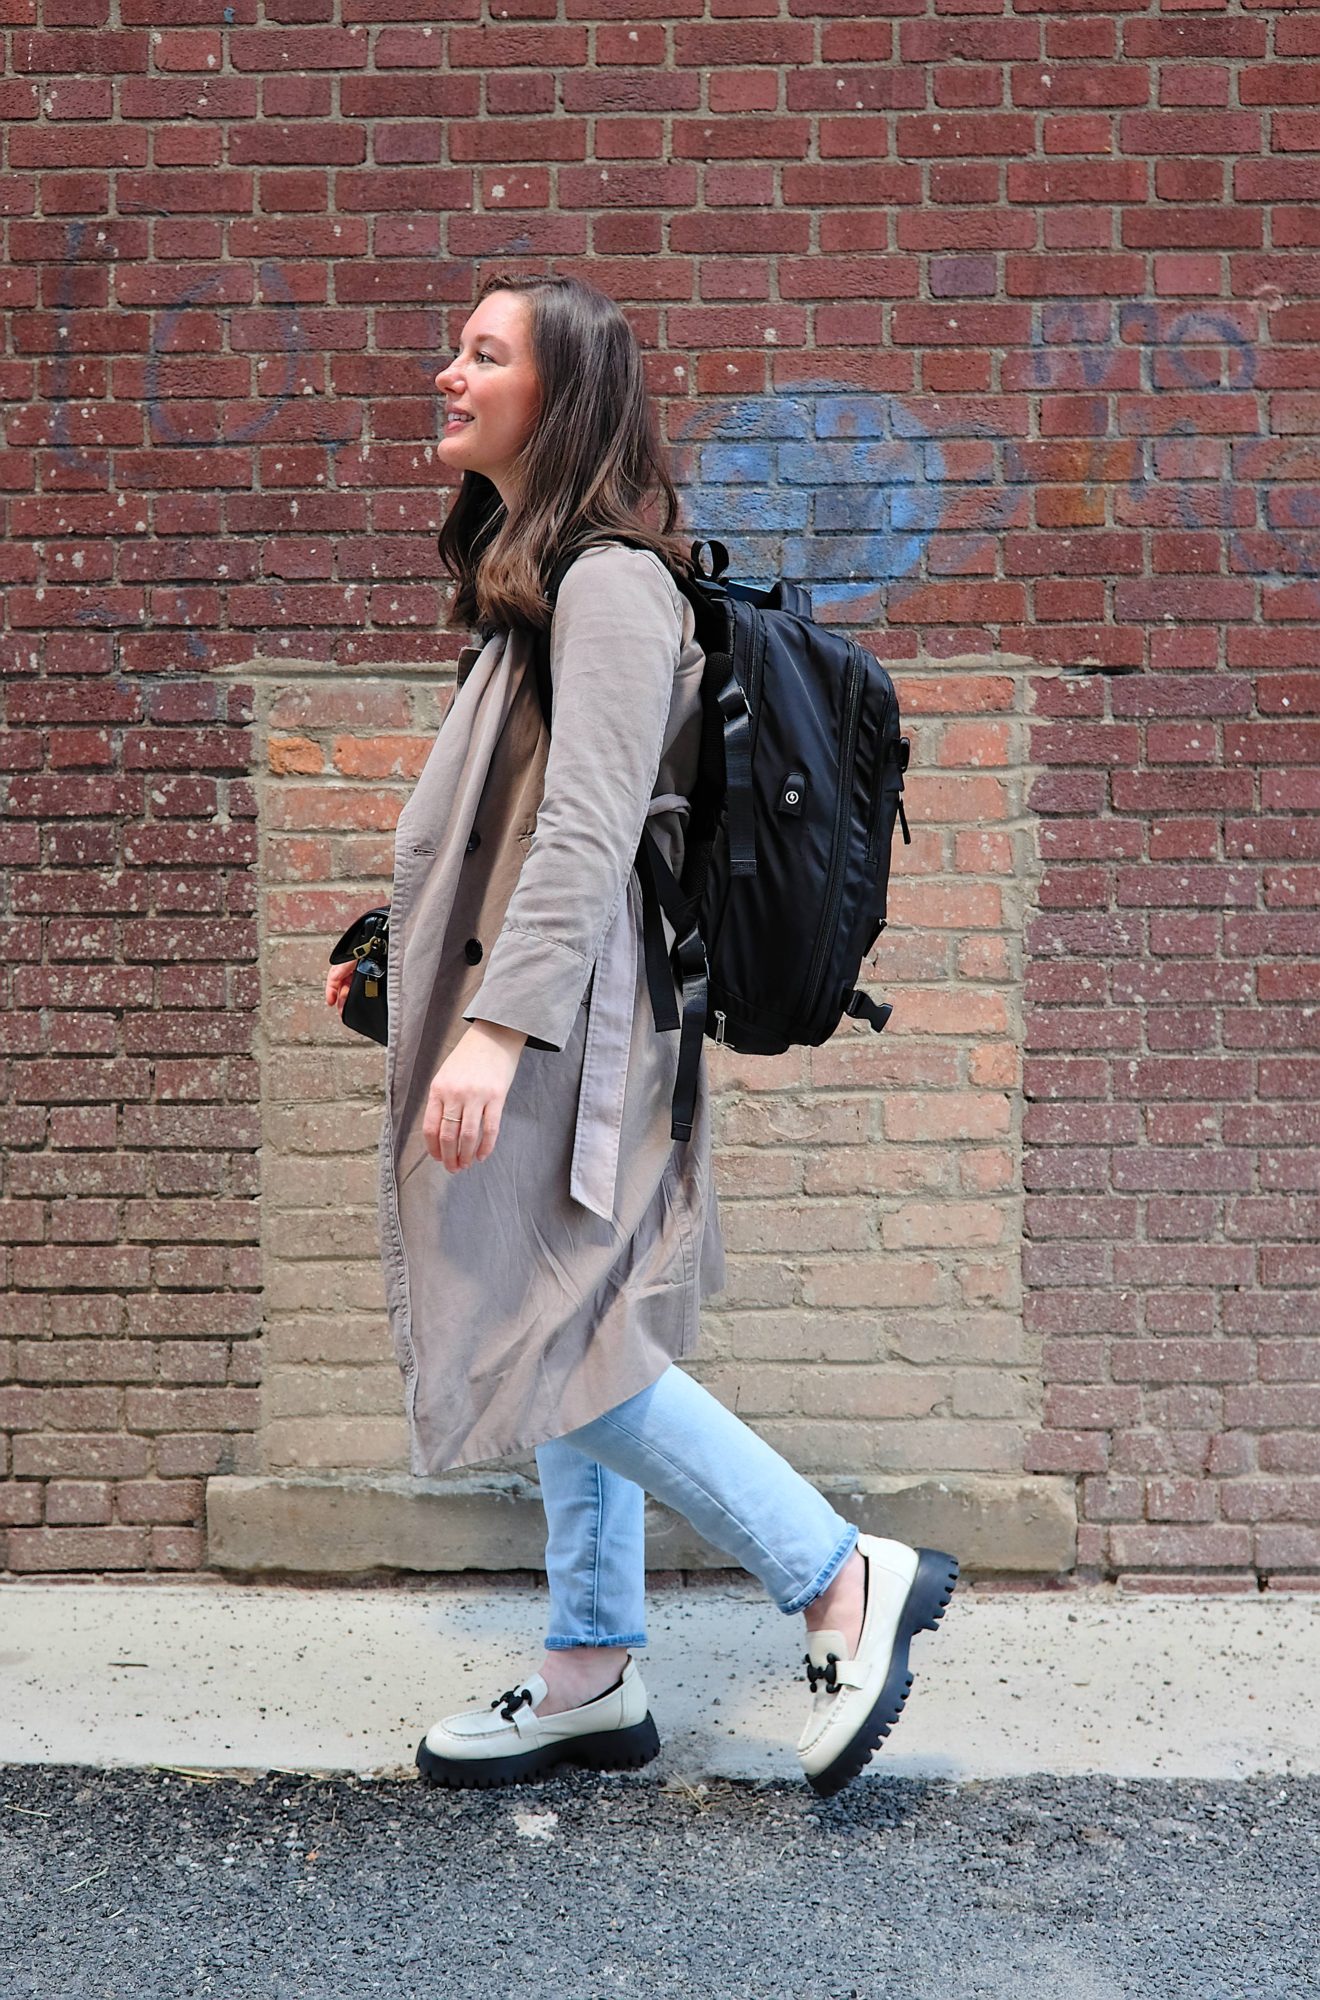 Alyssa walks on a sidewalk in Detroit